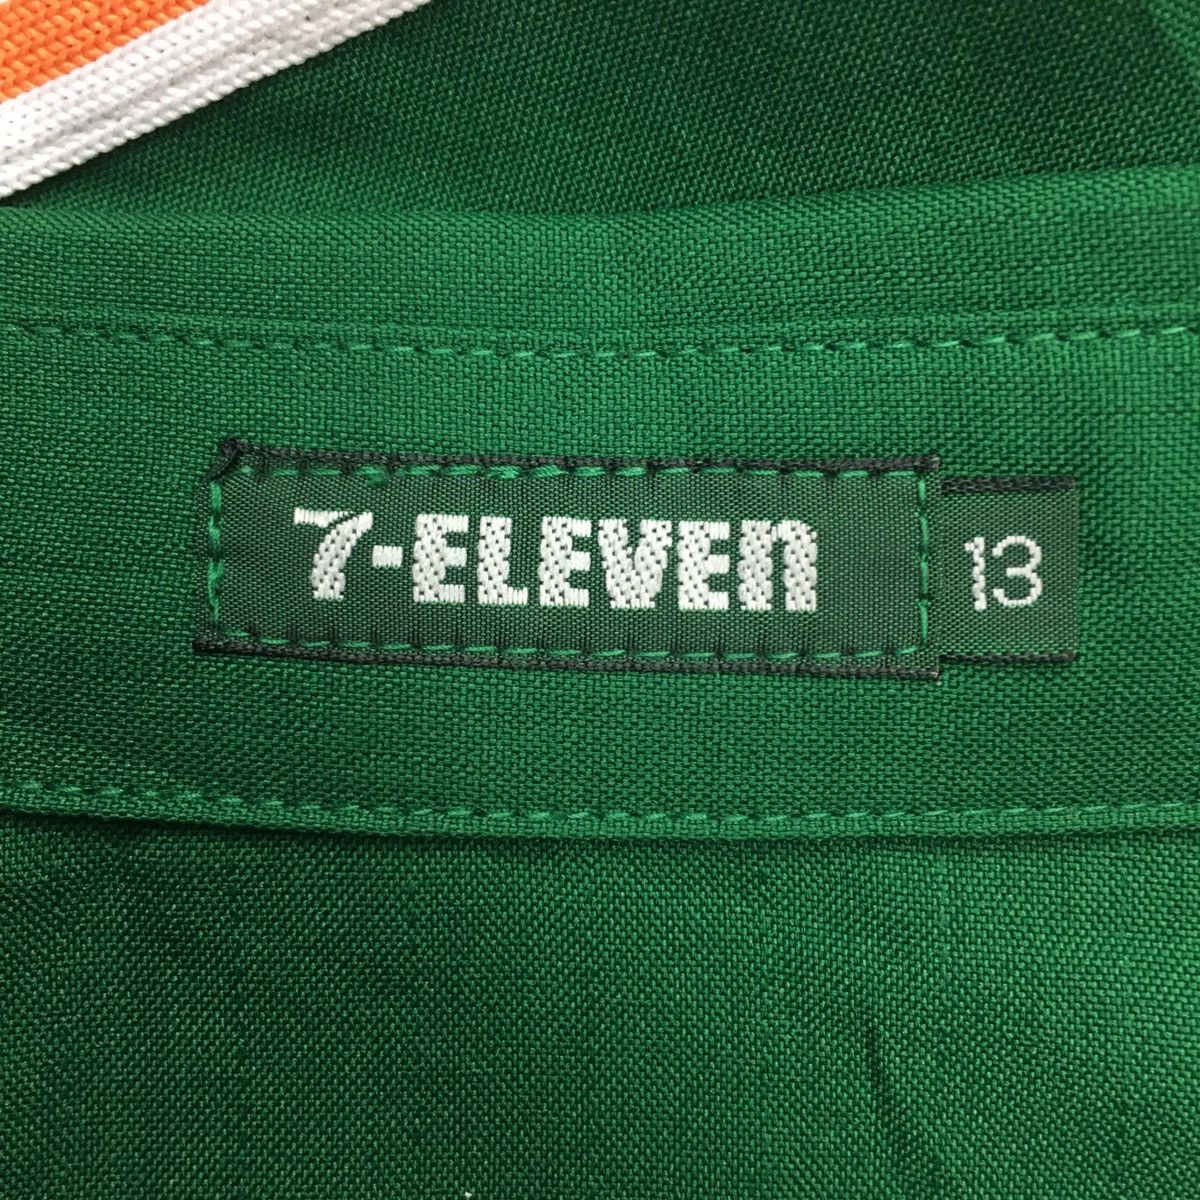 Vintage 7-ELEVEN Zip Up Shirt Spell Out 7 Eleven Worker Uniform Size US M / EU 48-50 / 2 - 8 Thumbnail